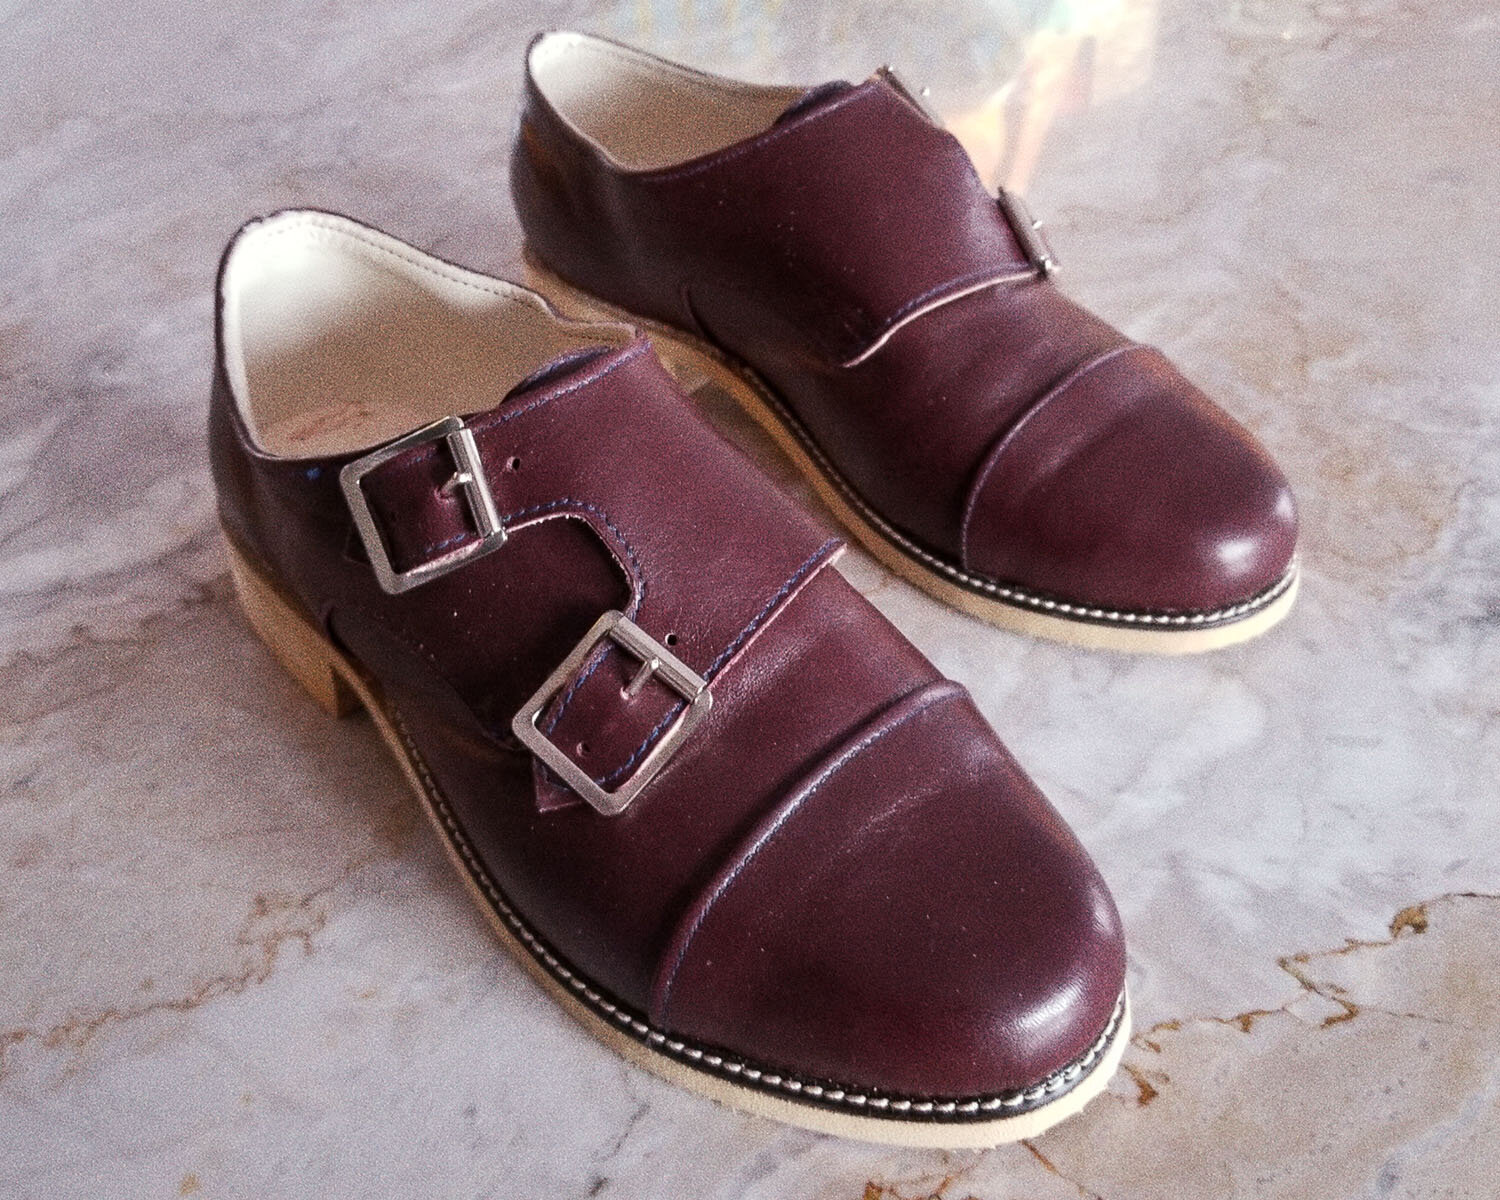 Oxblood double monk shoe.